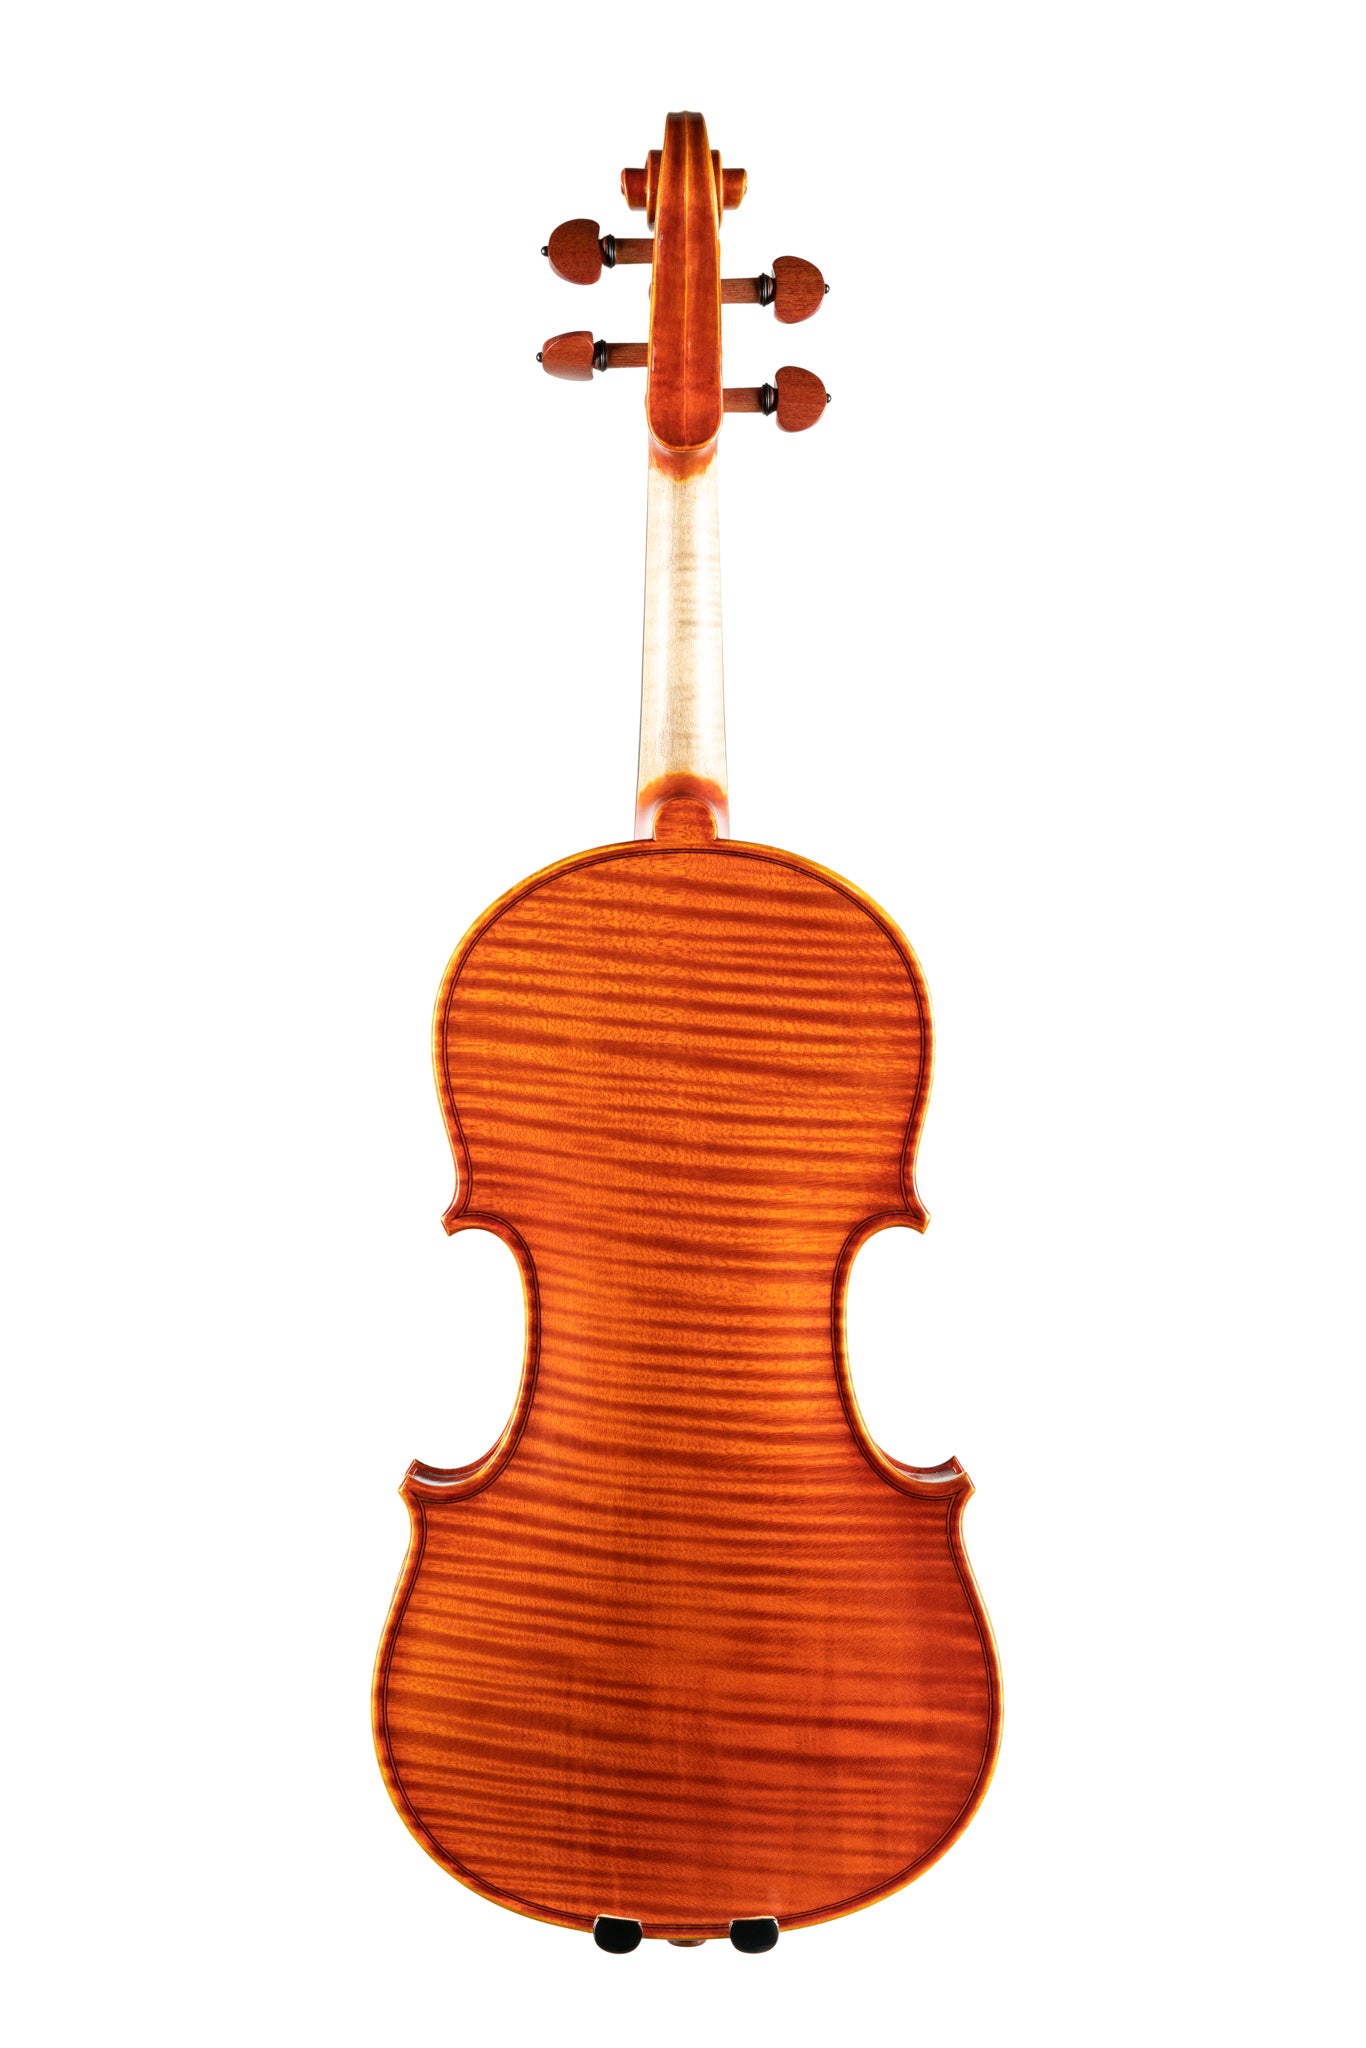 BL-700 Violin